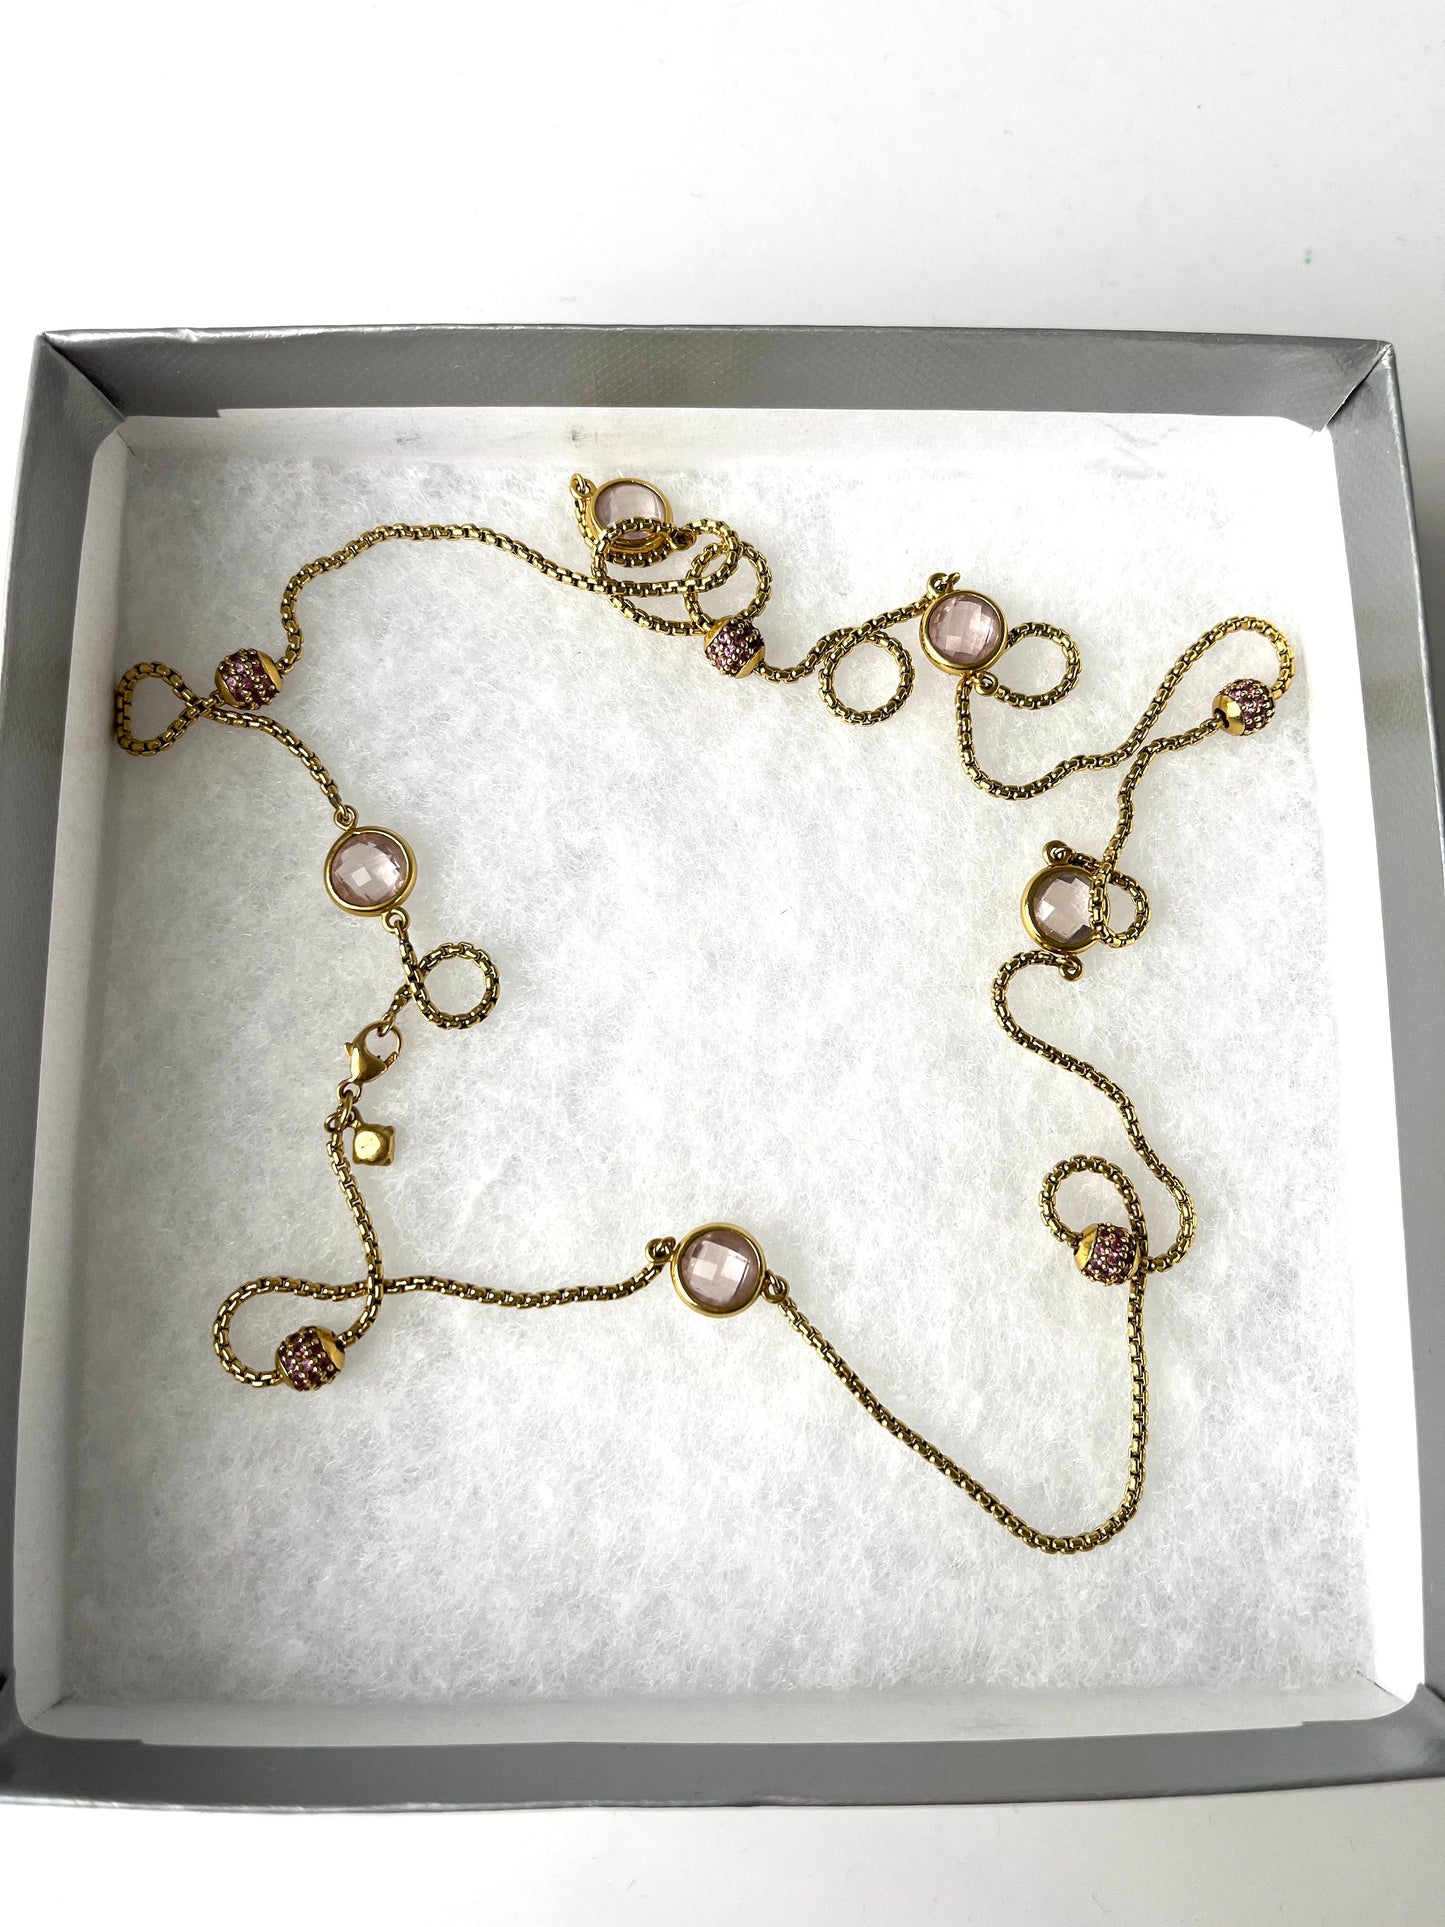 David Yurman 18k Gold Rose Quartz and Pink Sapphire Station Long Necklace